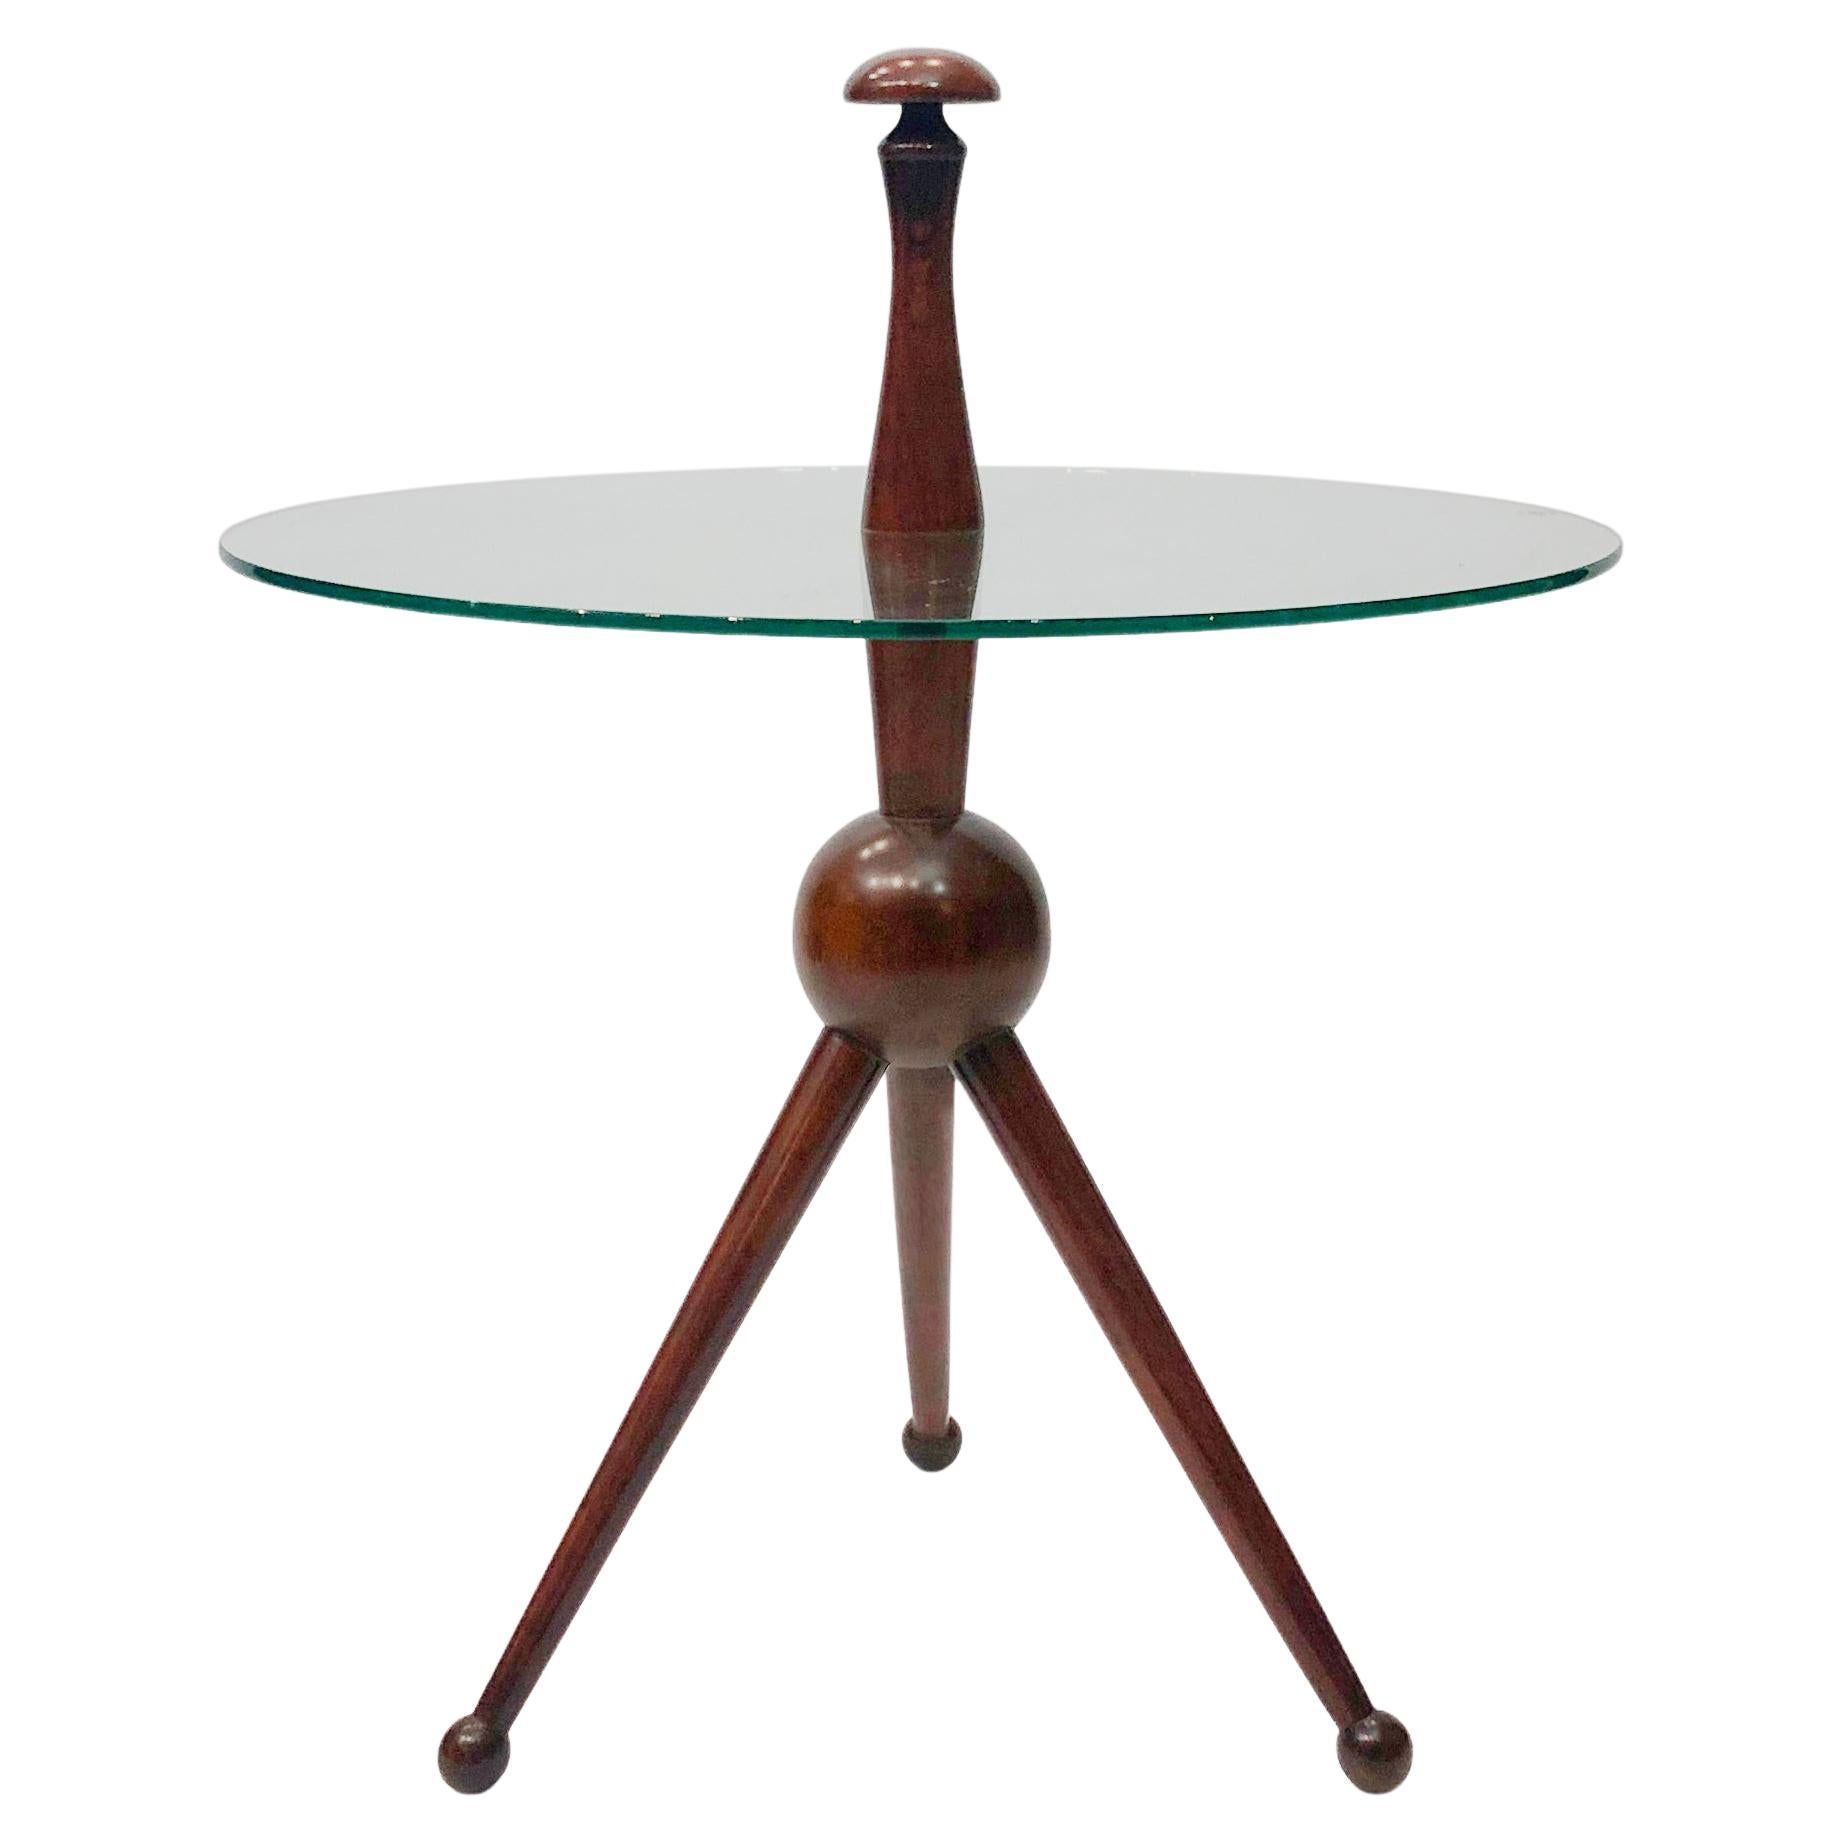 Cesare Lacca Tripod Side Table #2 1950s Midcentury Italian Vintage Wood Glass